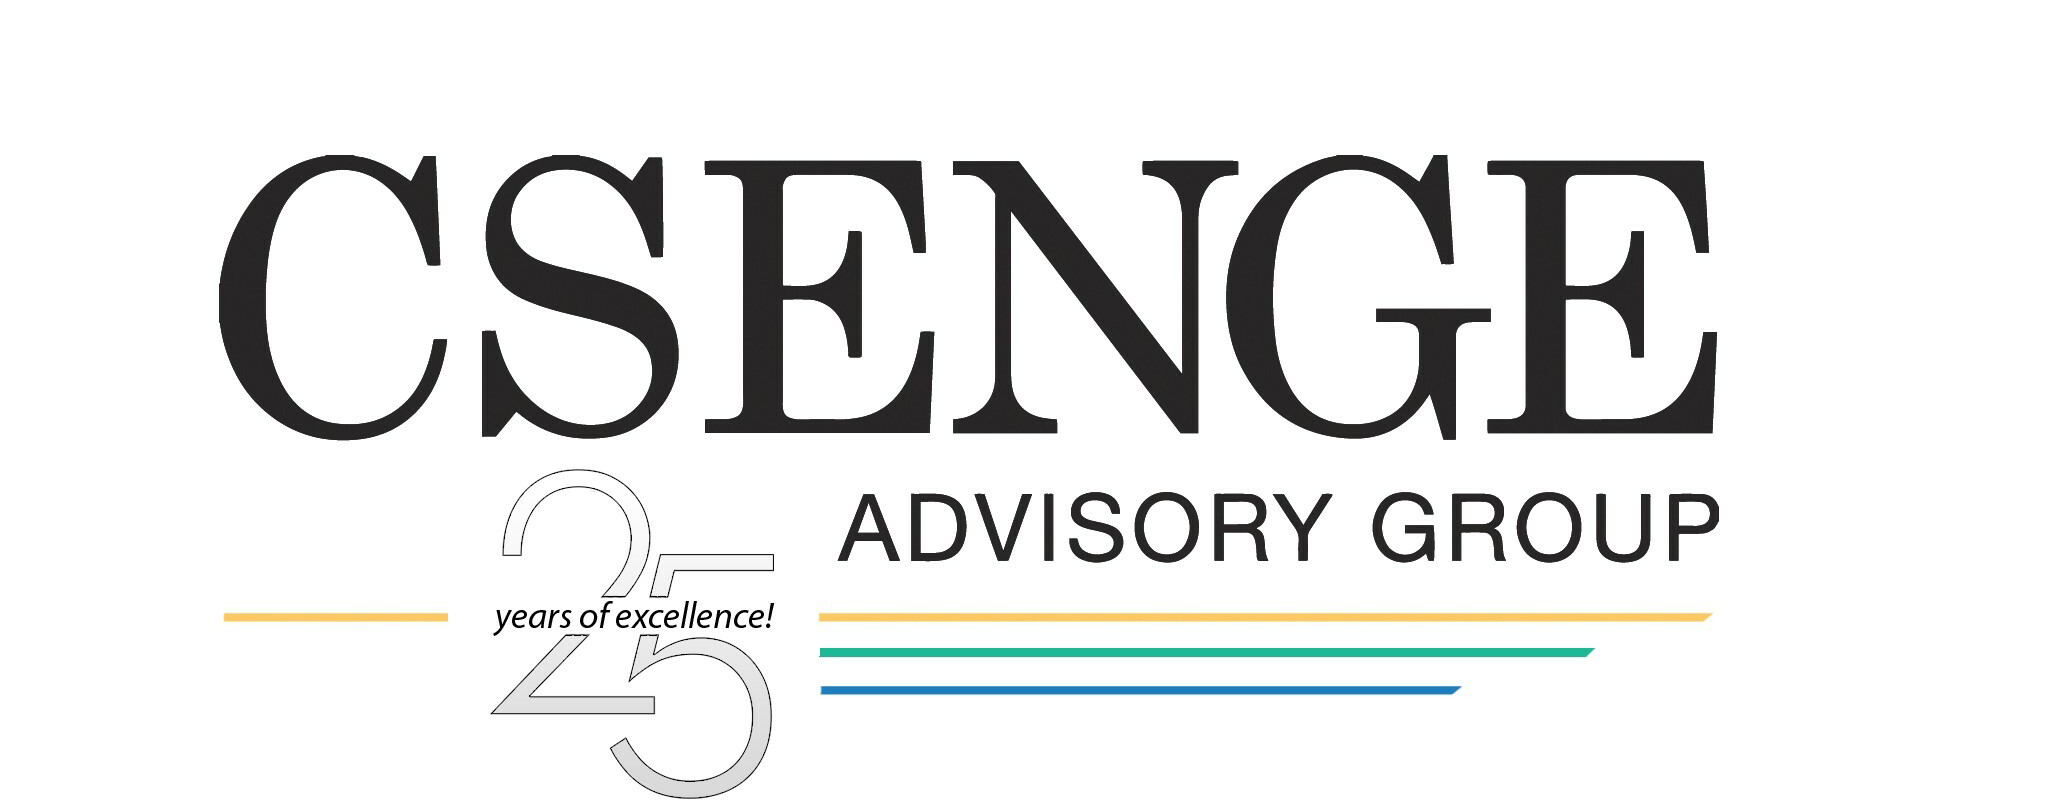 Csenge Advisory Group 25th Anniversary Logo